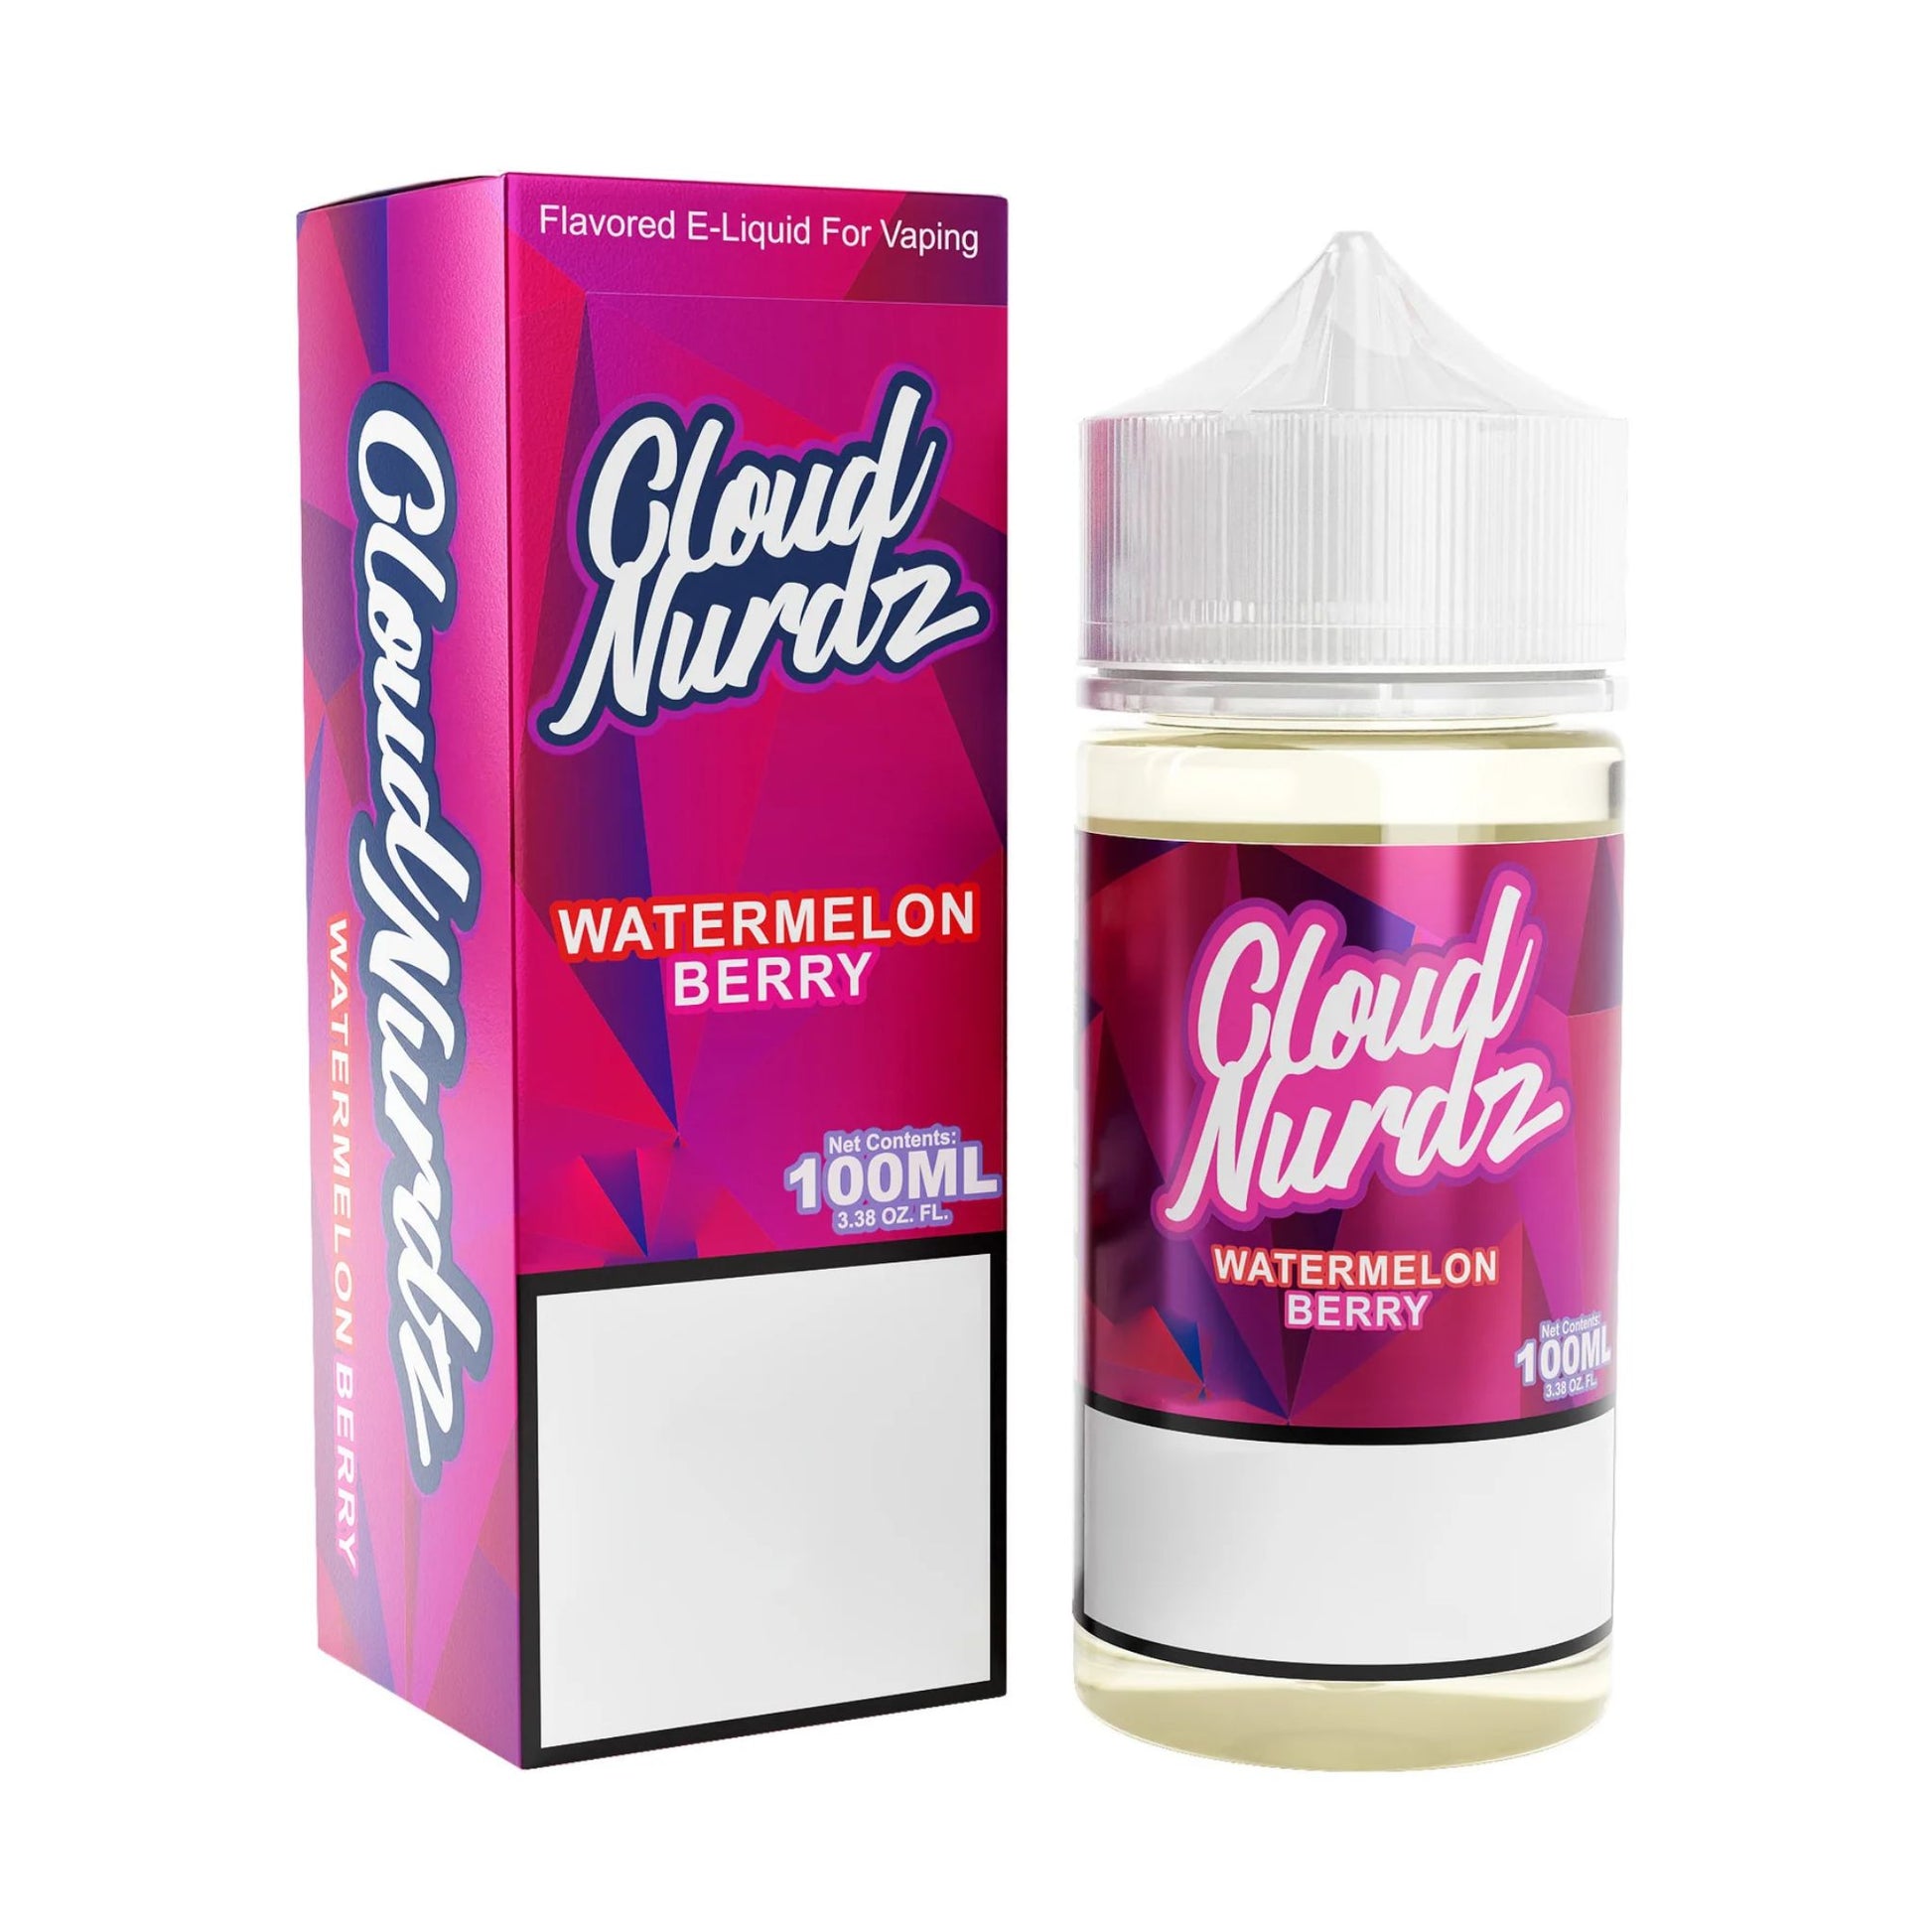 Cloud Nurdz | Watermelon Berry | 100ml bottle and box